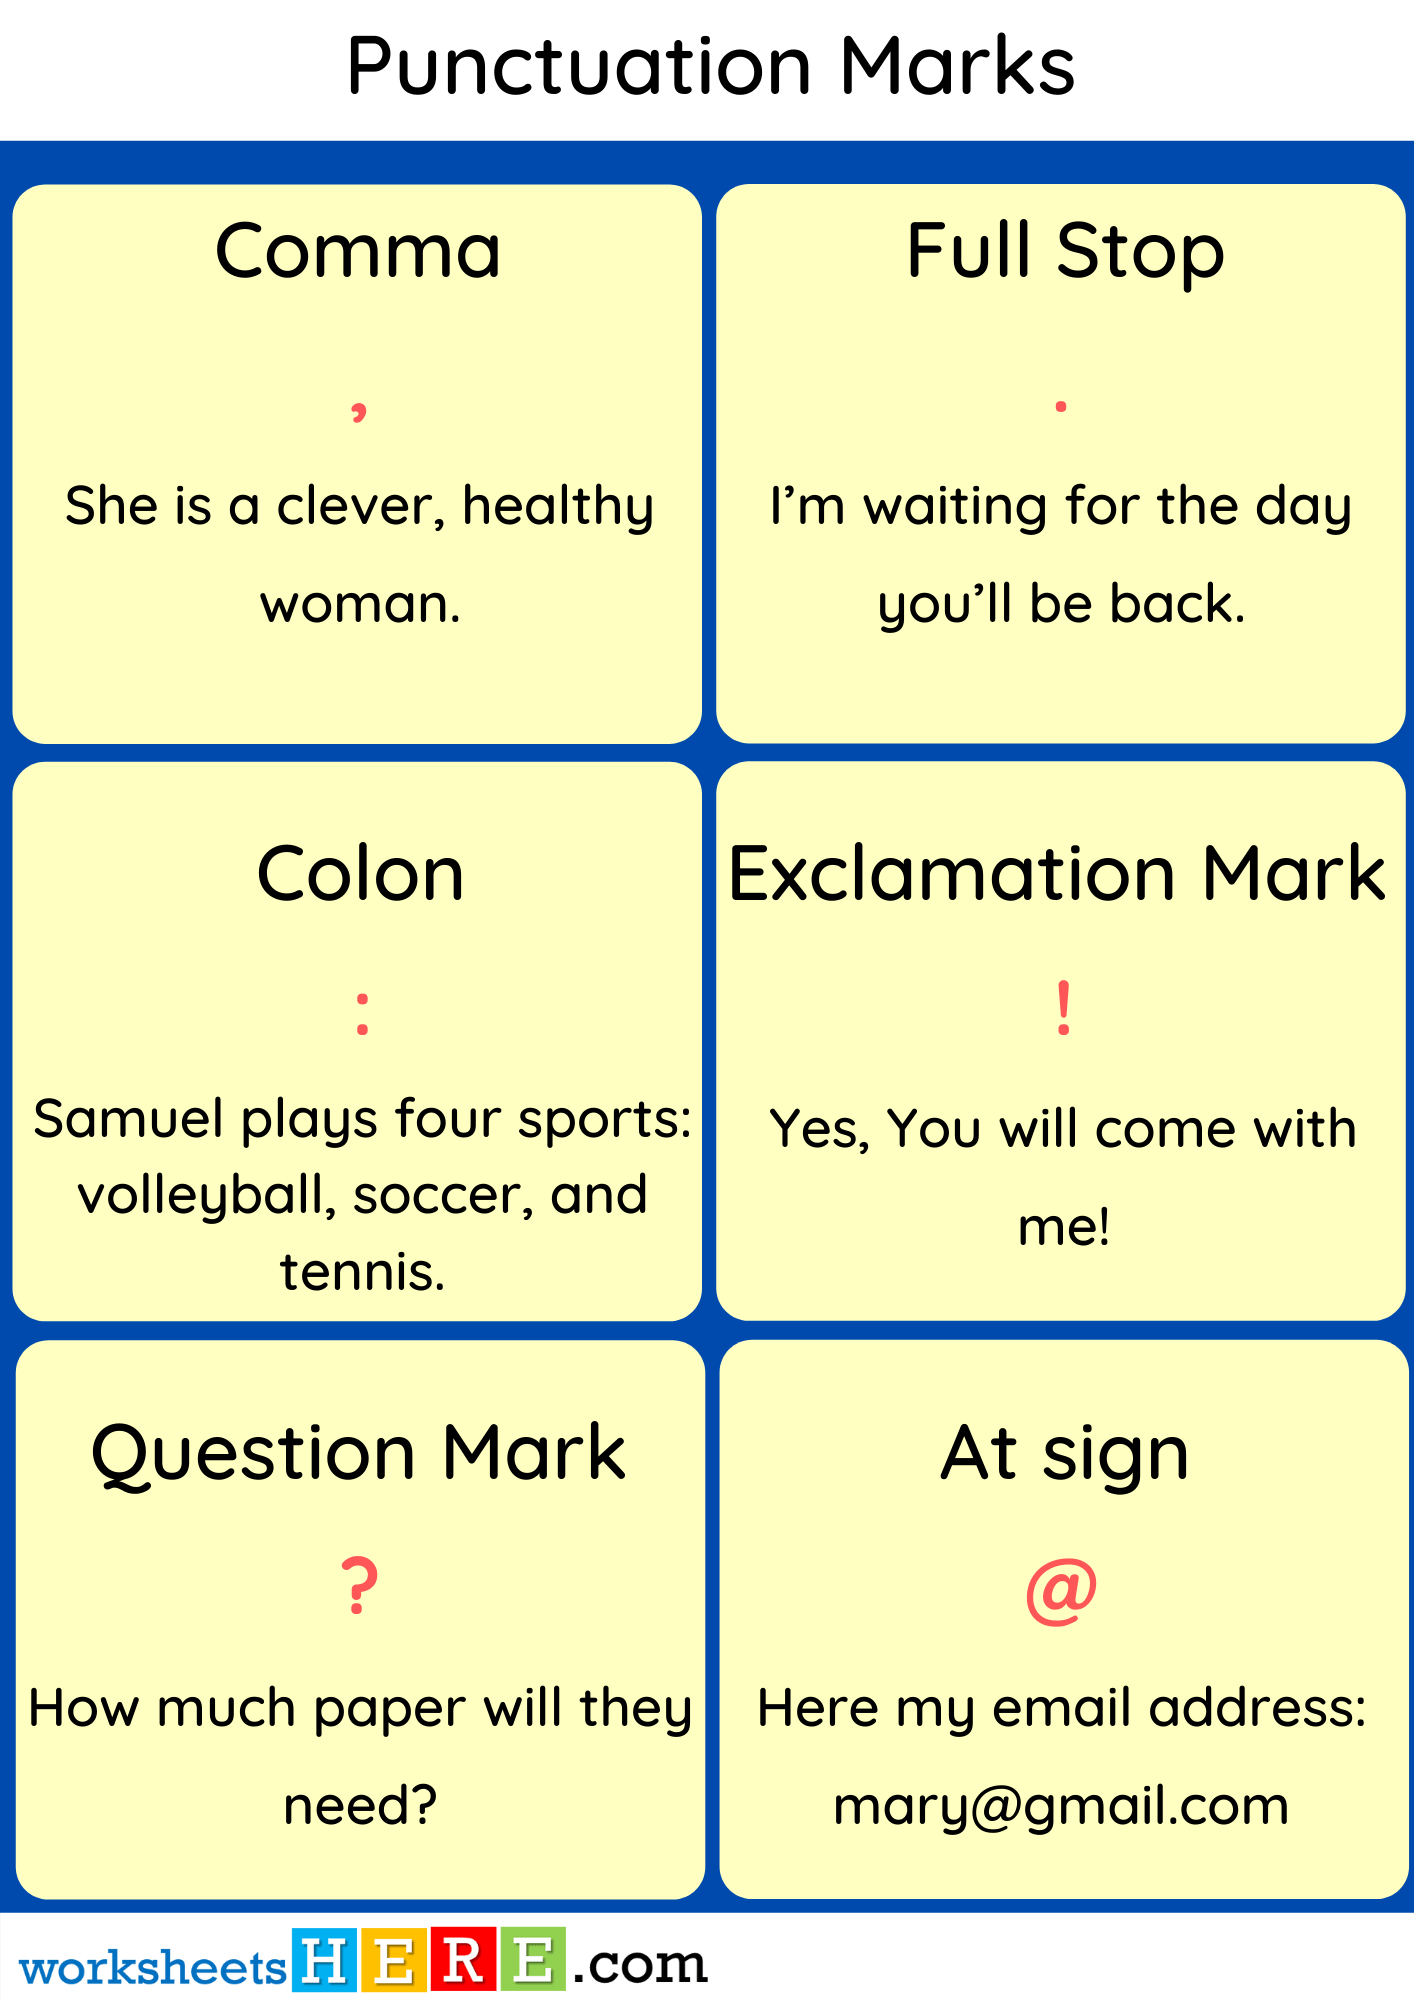 Punctuation Marks, Symbols and Example Sentences PDF Worksheet